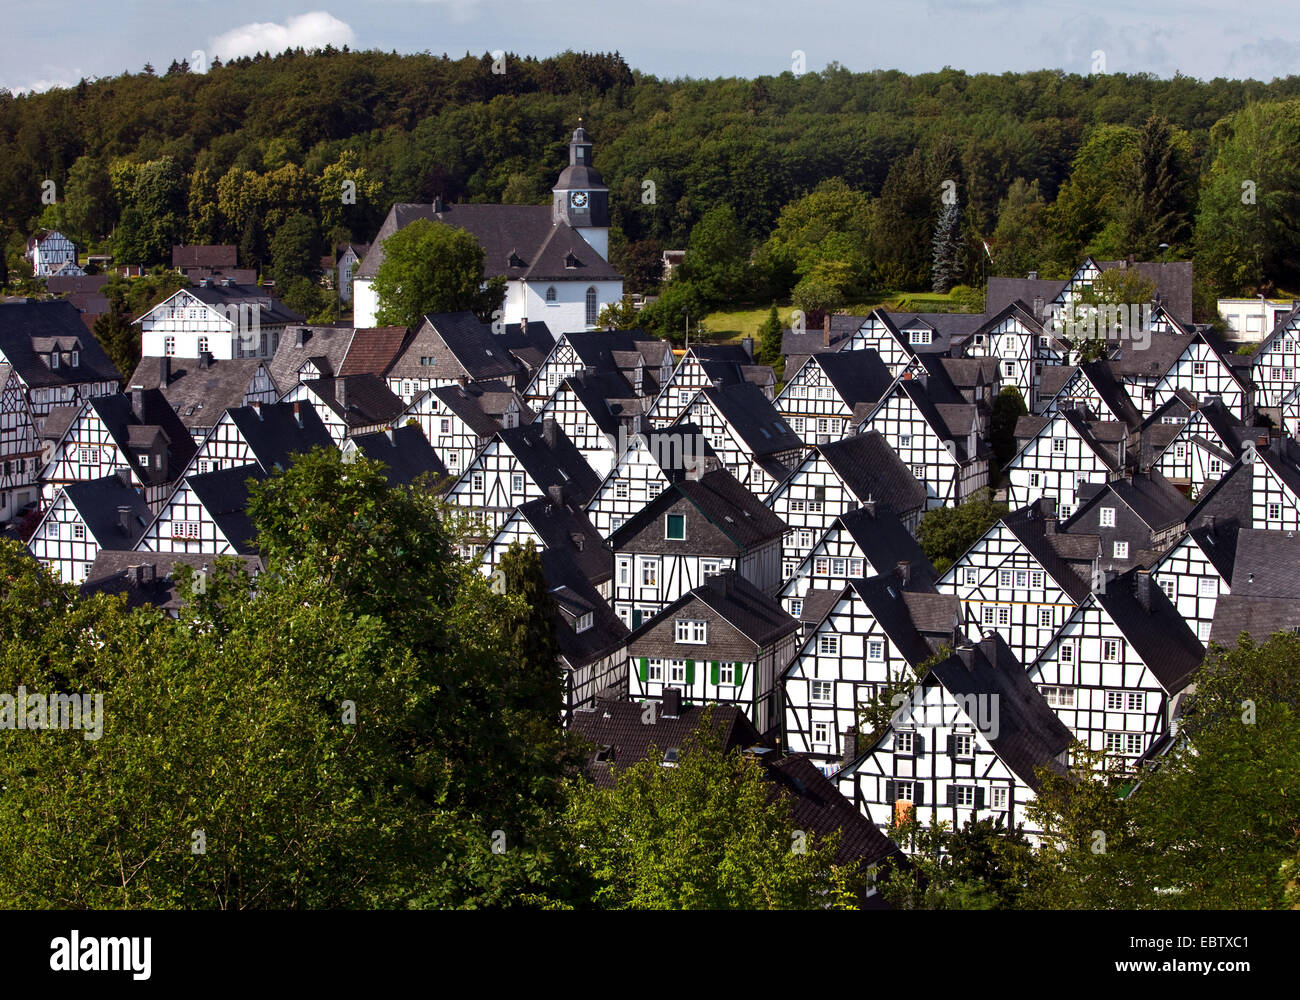 alter-flecken-historical-city-of-freudenberg-germany-north-rhine-westphalia-EBTXC1.jpg